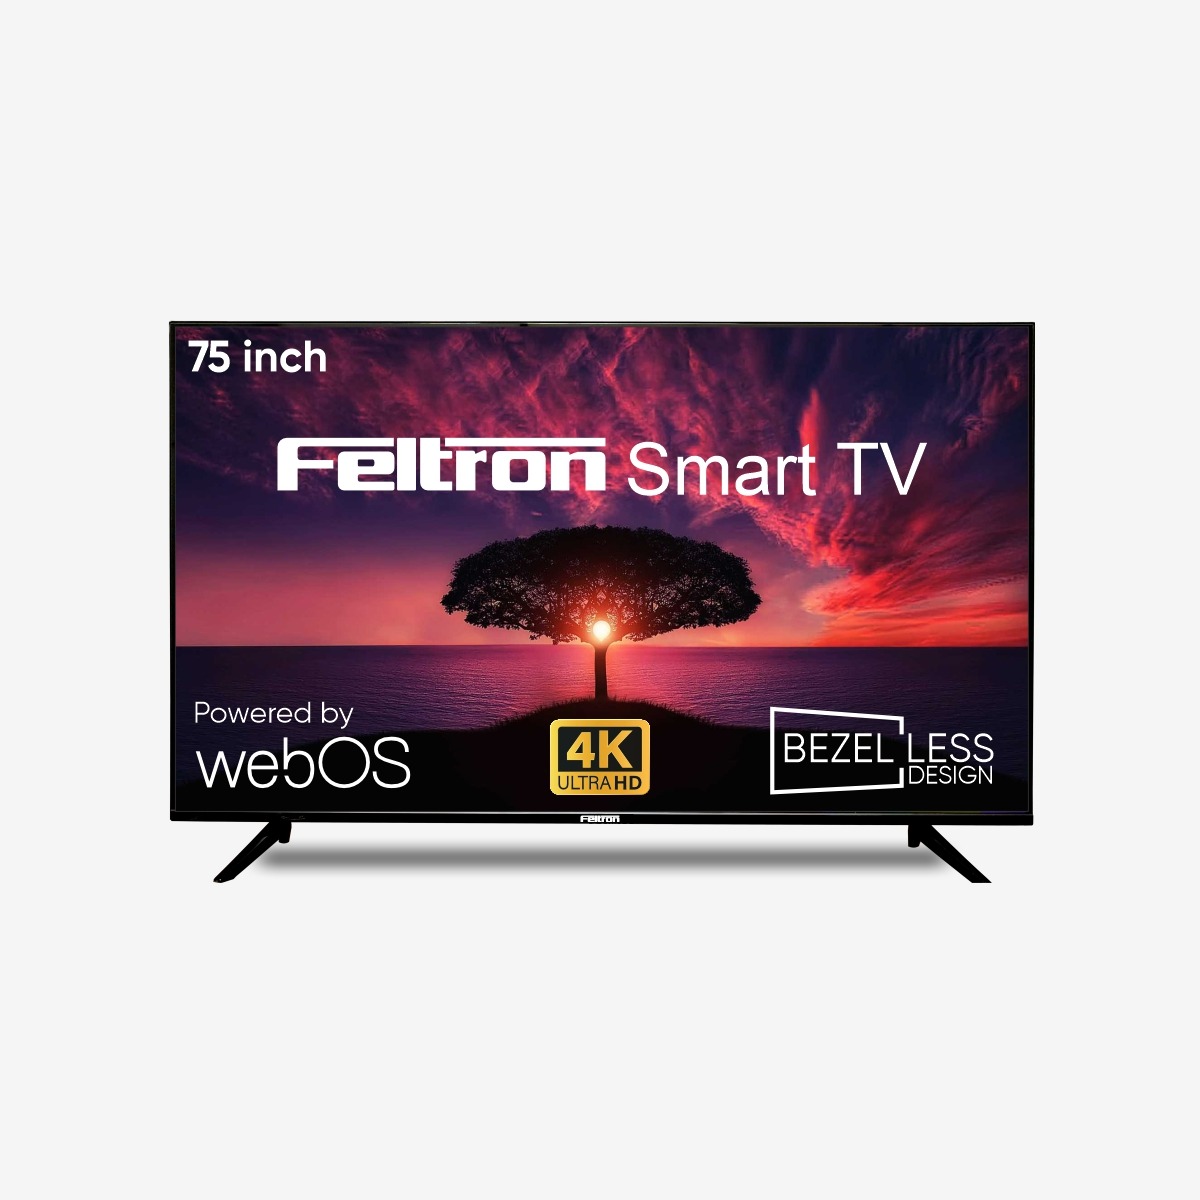 Feltron 190 cm (75 inch) Ultra HD LED Smart Web OS TV Bezel-less design (FT75094KSGFL)